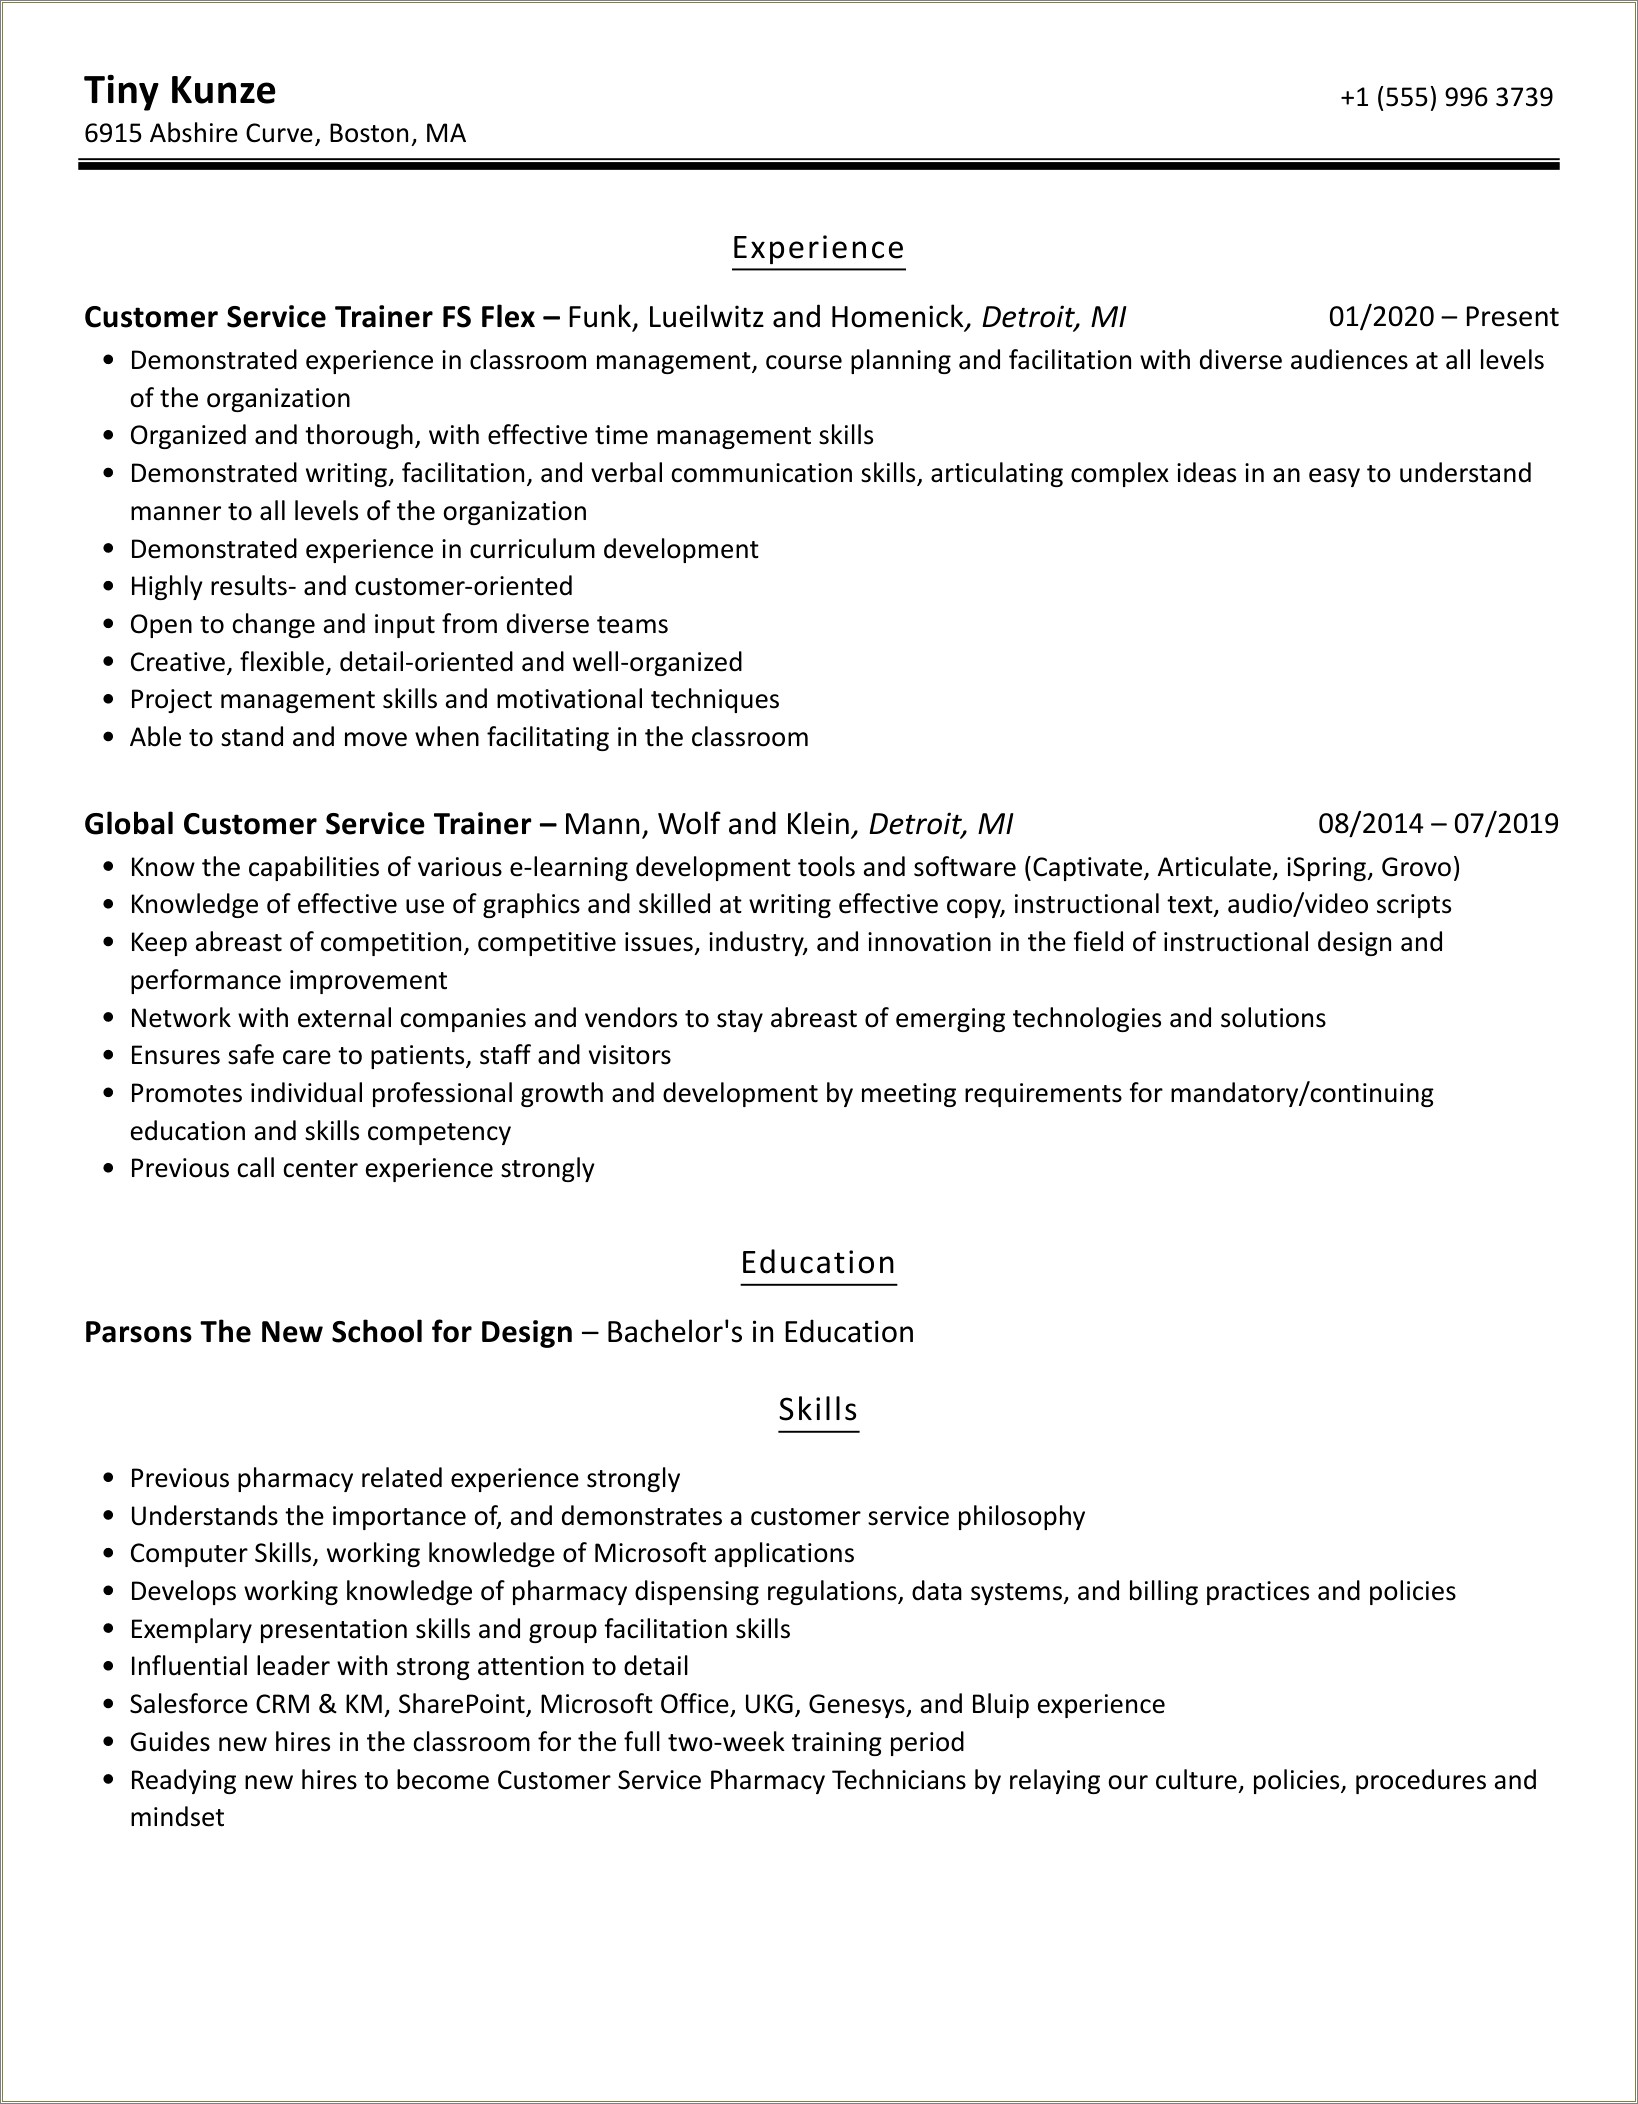 Call Center Technical Support Trainer Job Description Resume